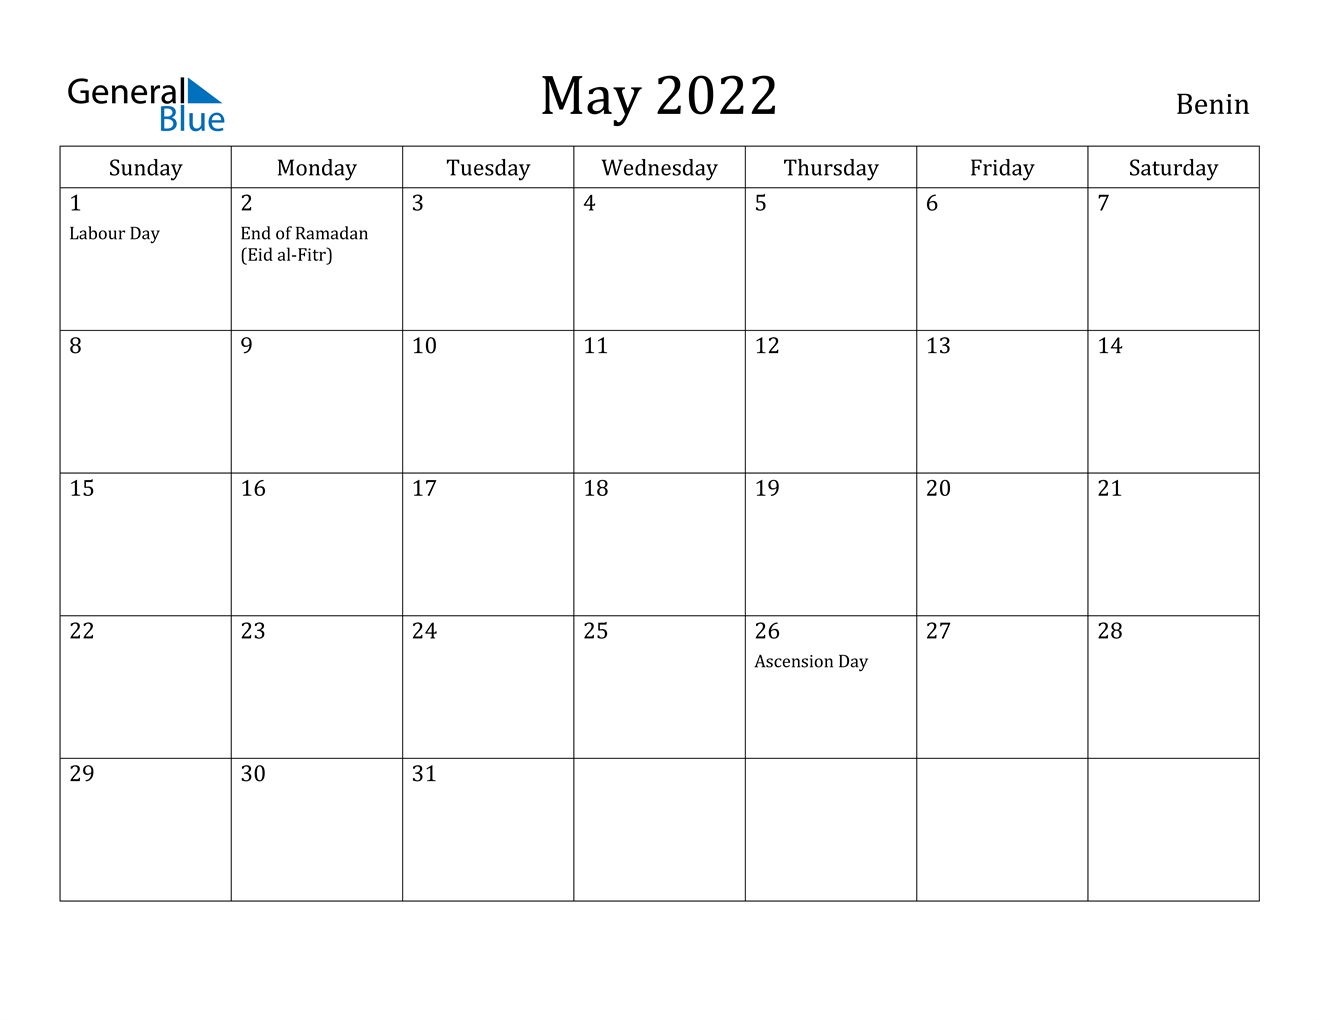 May 2022 Calendar - Benin